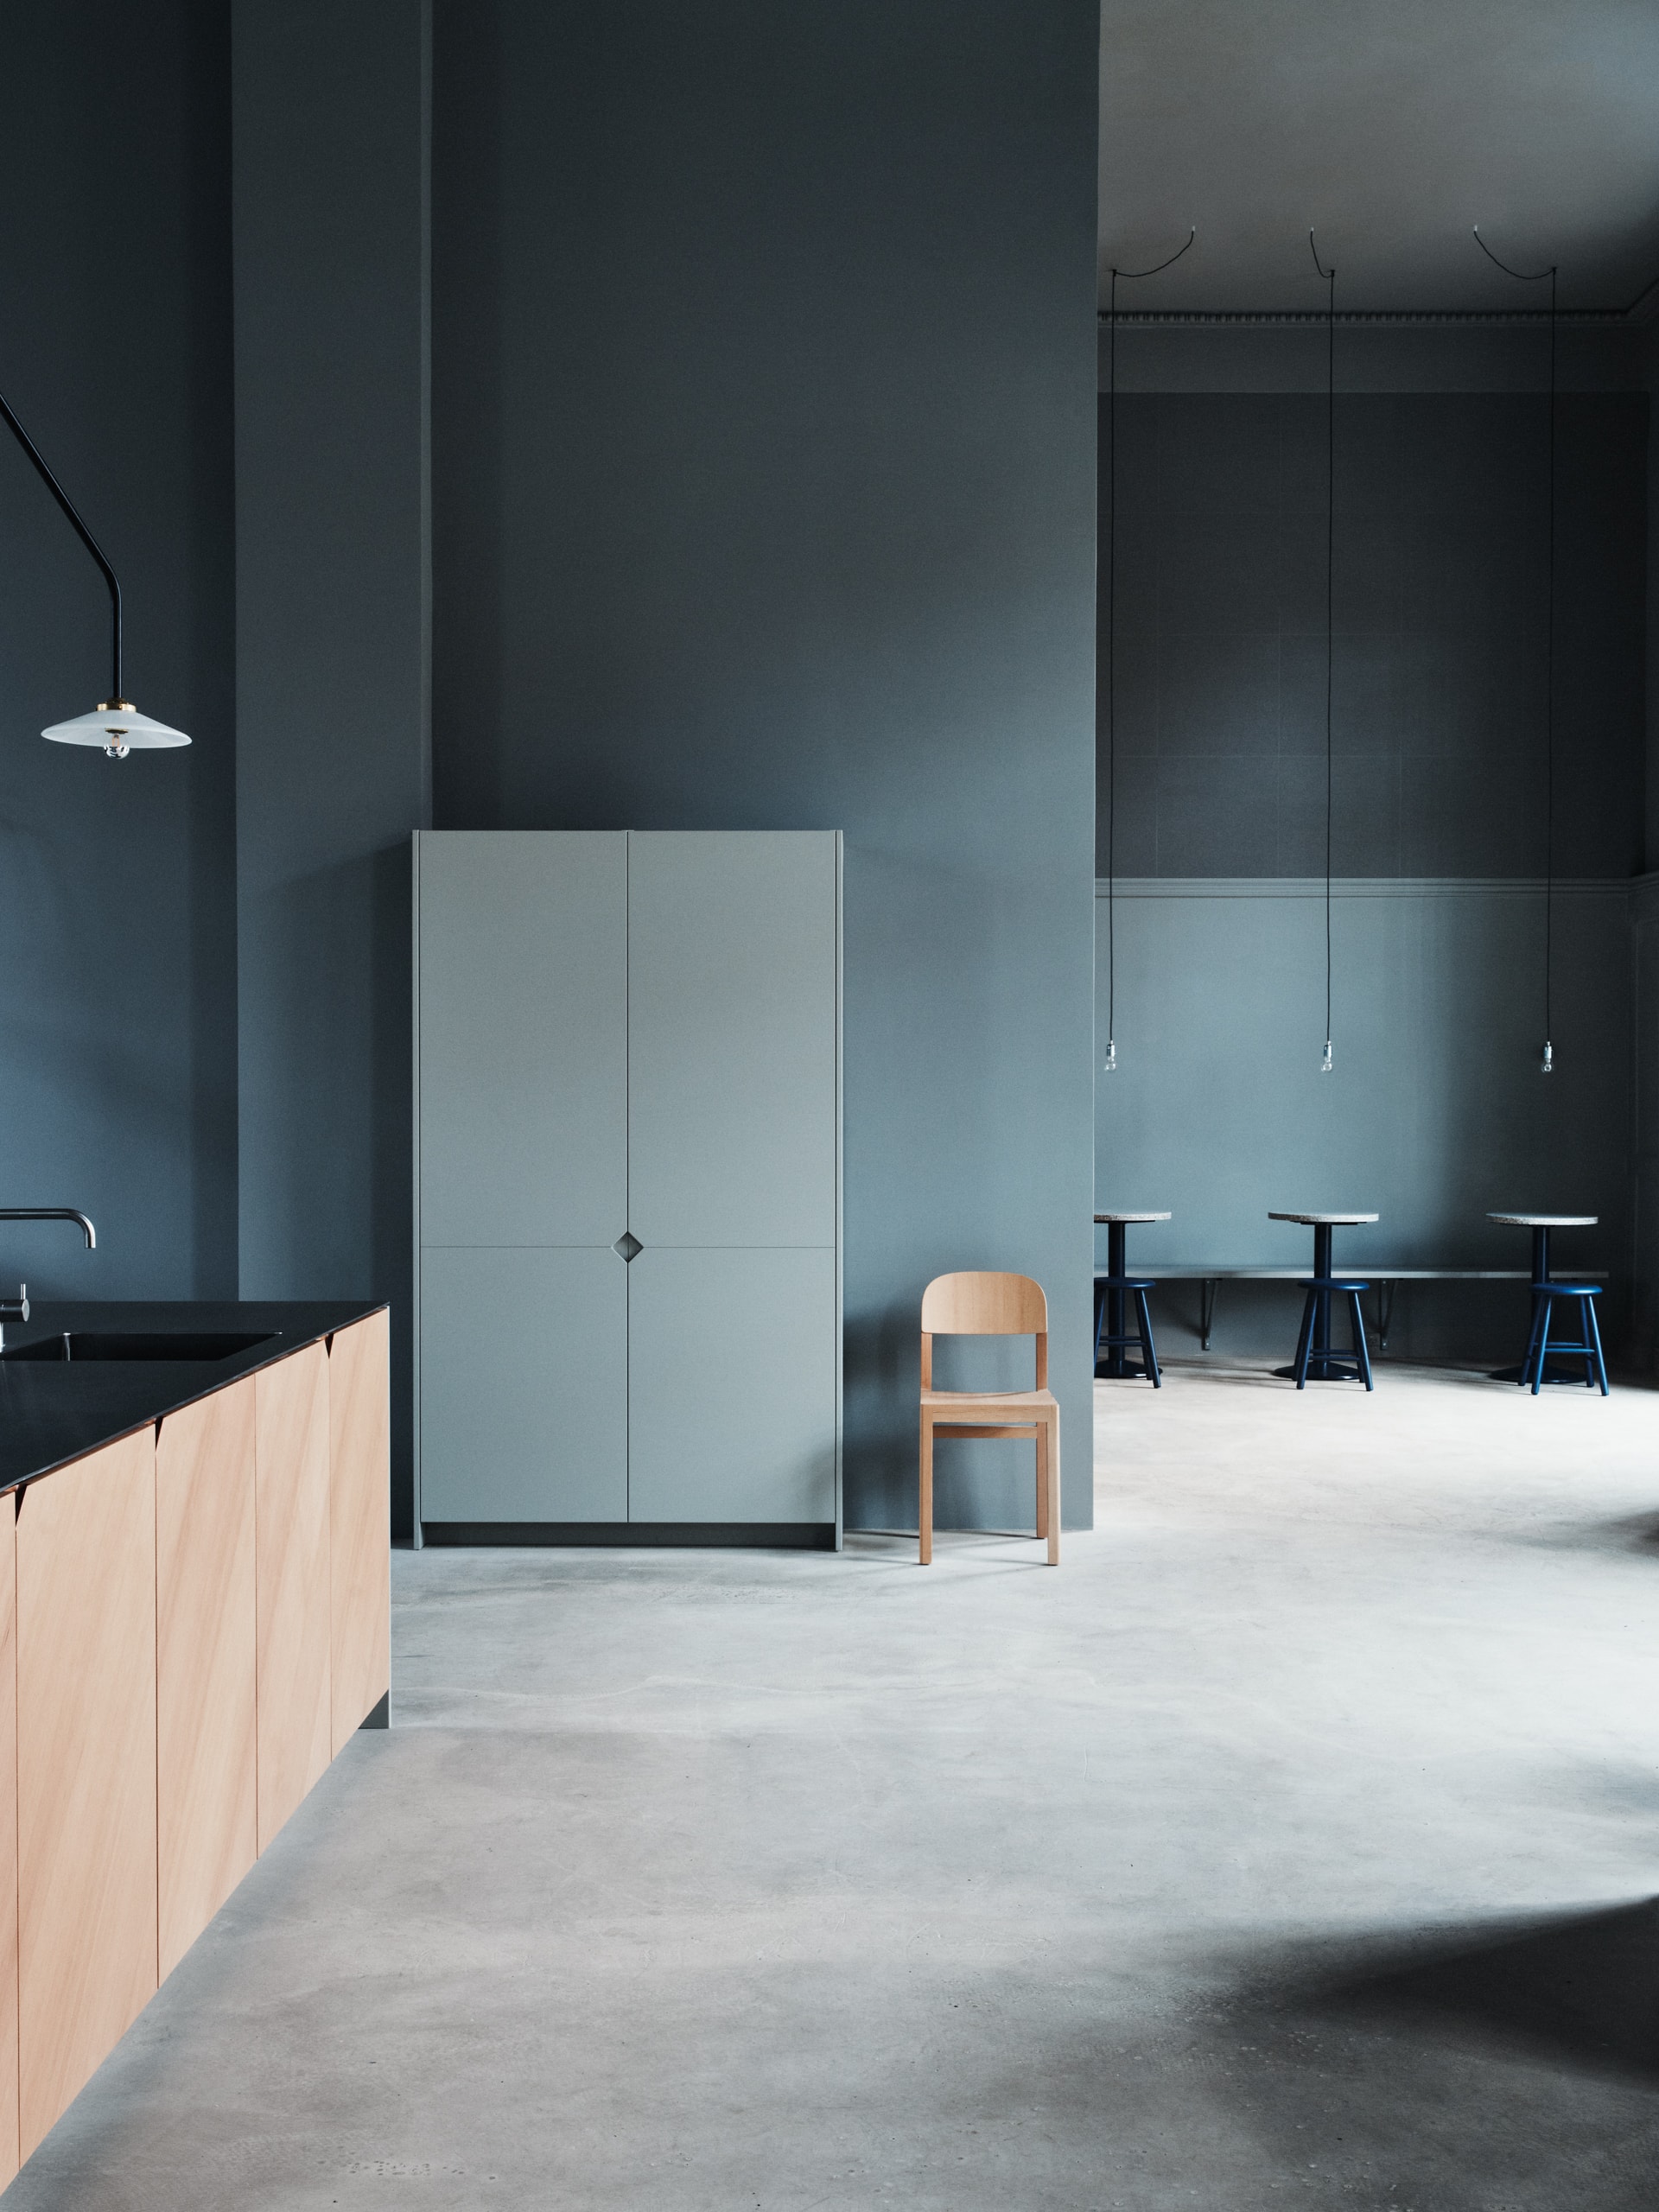 Stunning new kitchen showroom by Reform